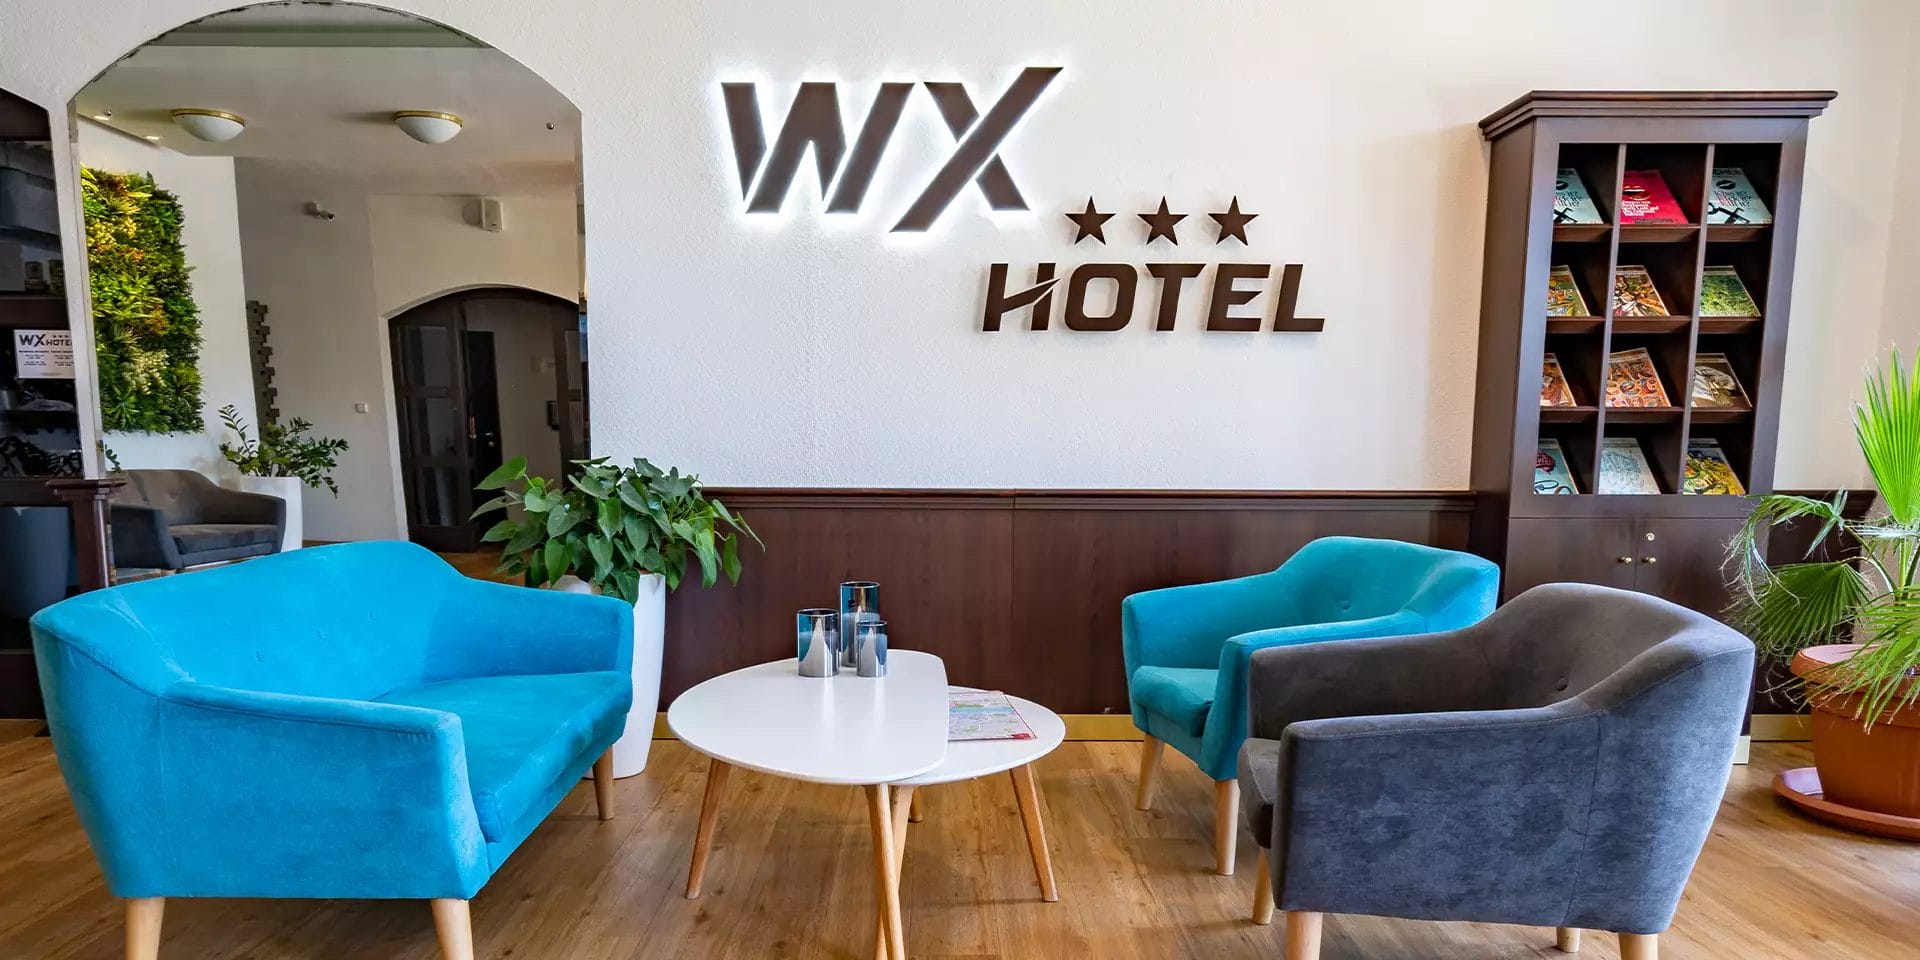 WX Hotel reception